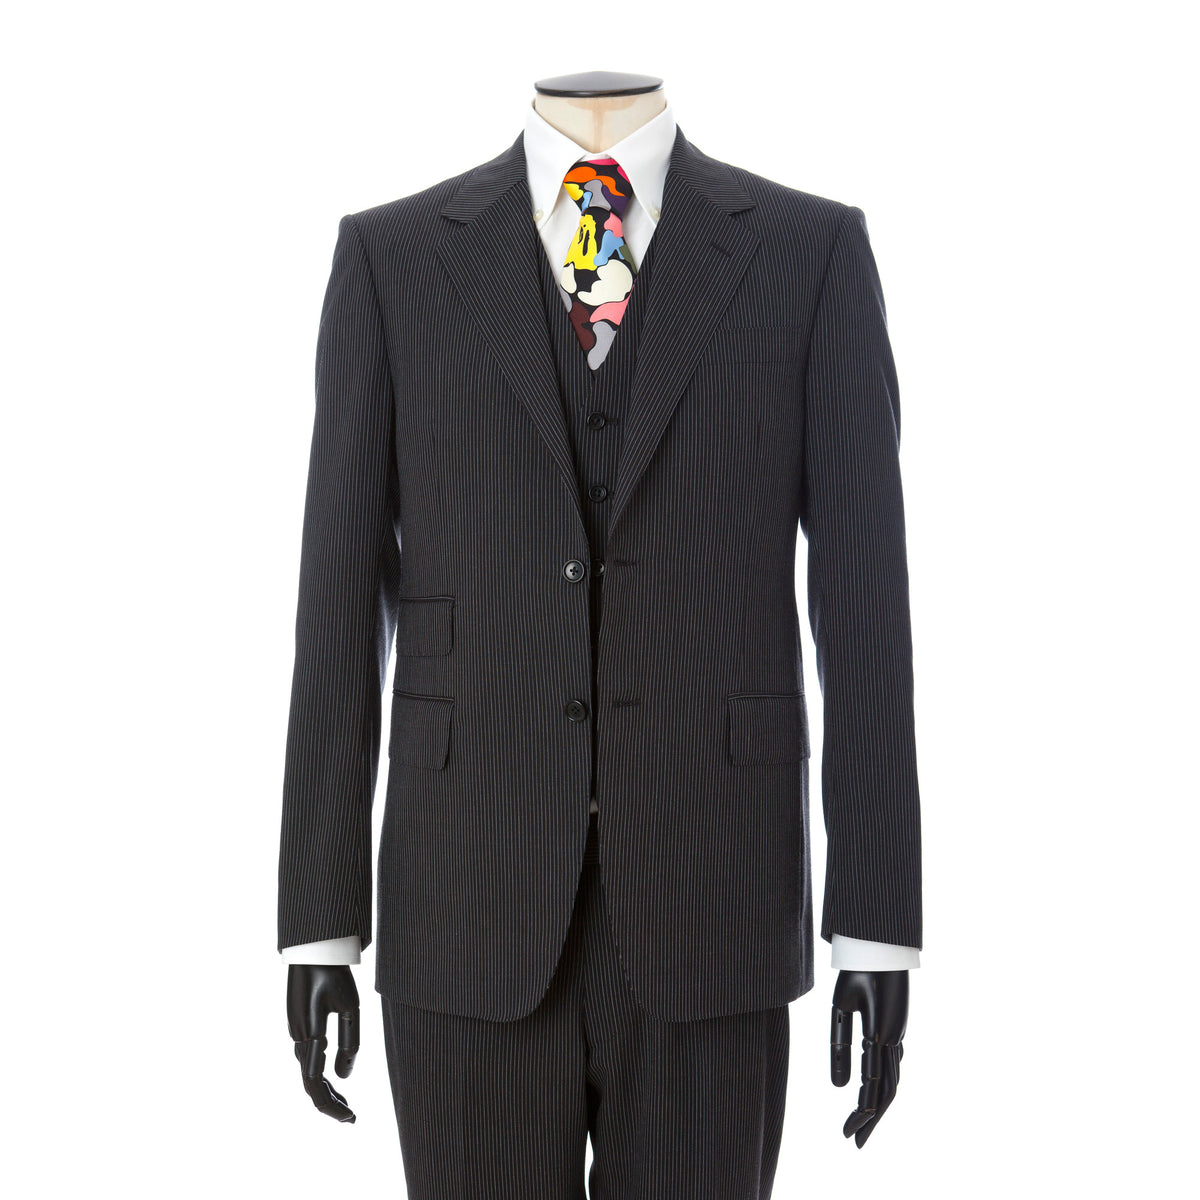 Mr. Bathing Ape Pin Stripe Classic British 3pcs Suit Black - Concrete